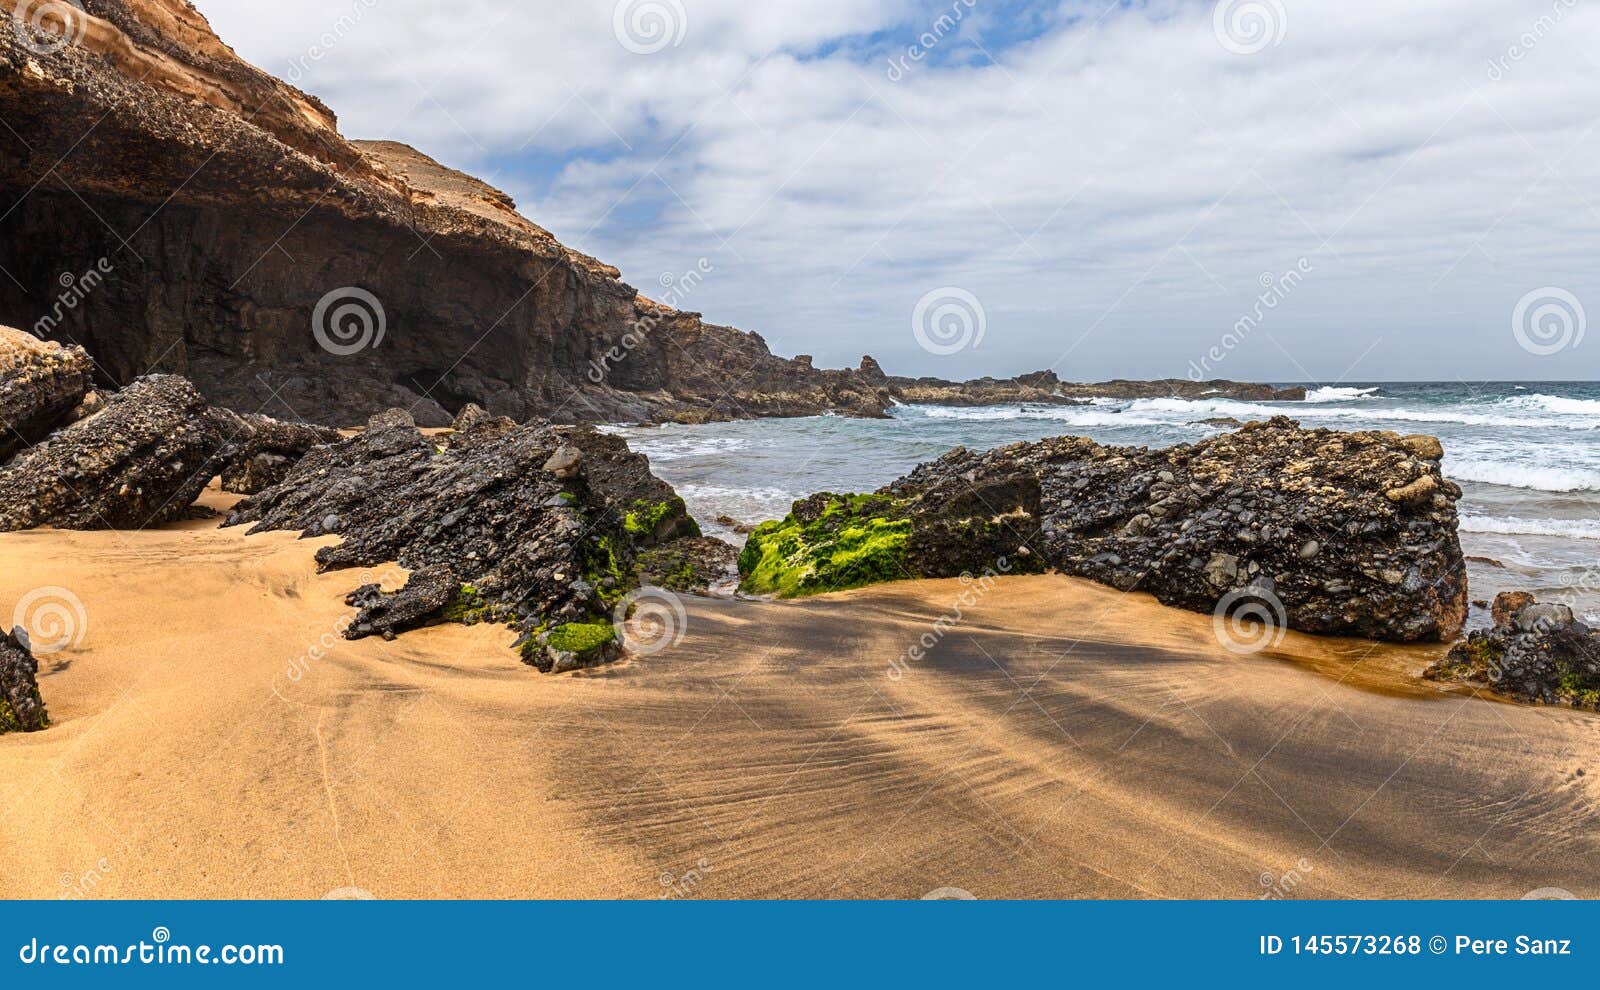 la solapa, a virgin gold-colored sandy beach in fuerteventura